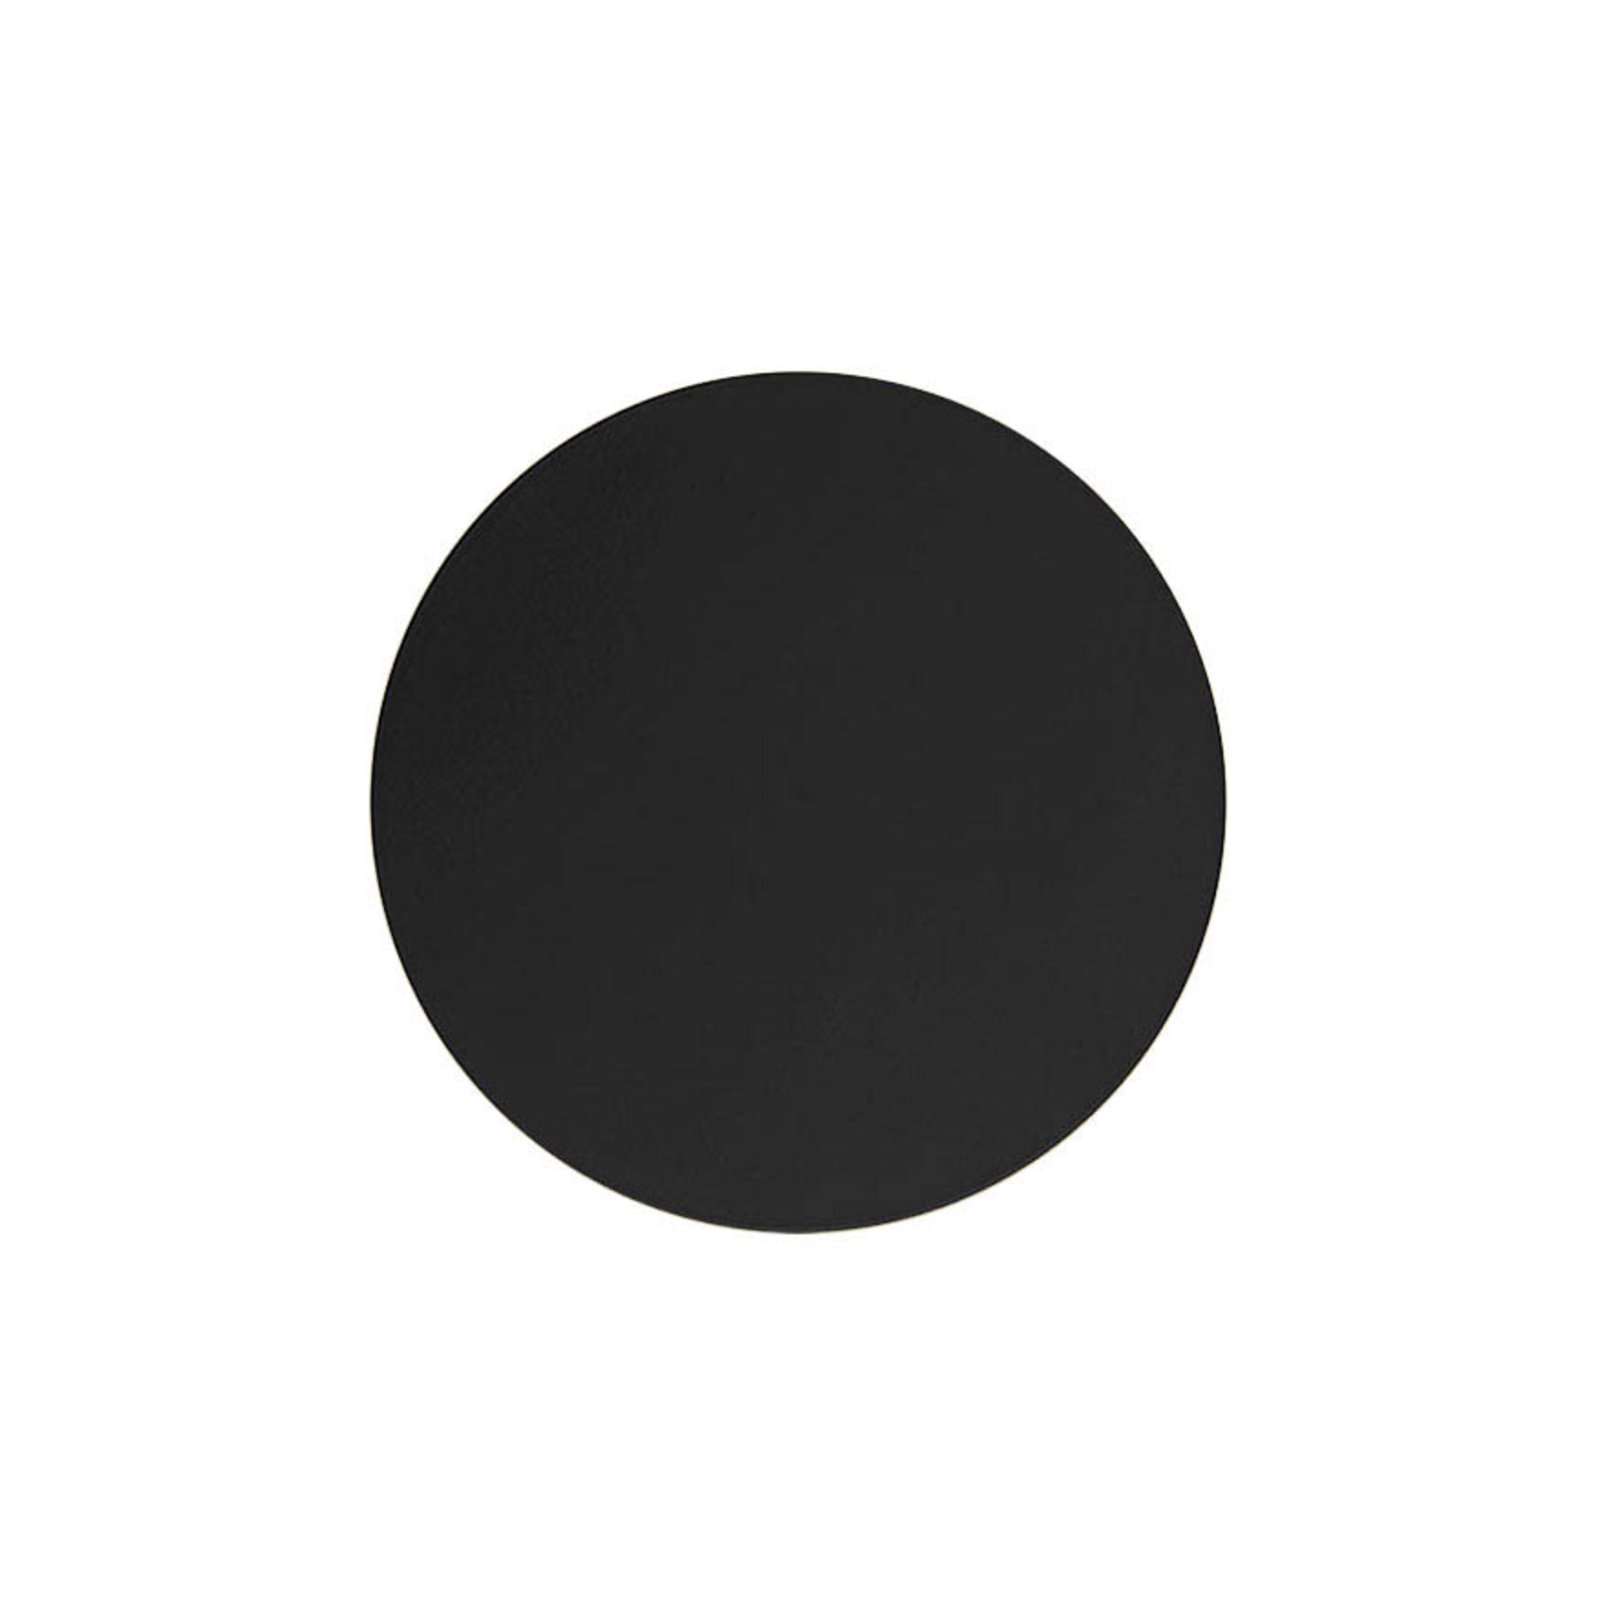 Lunia Nova stenska svetilka, črna, Ø 40 cm